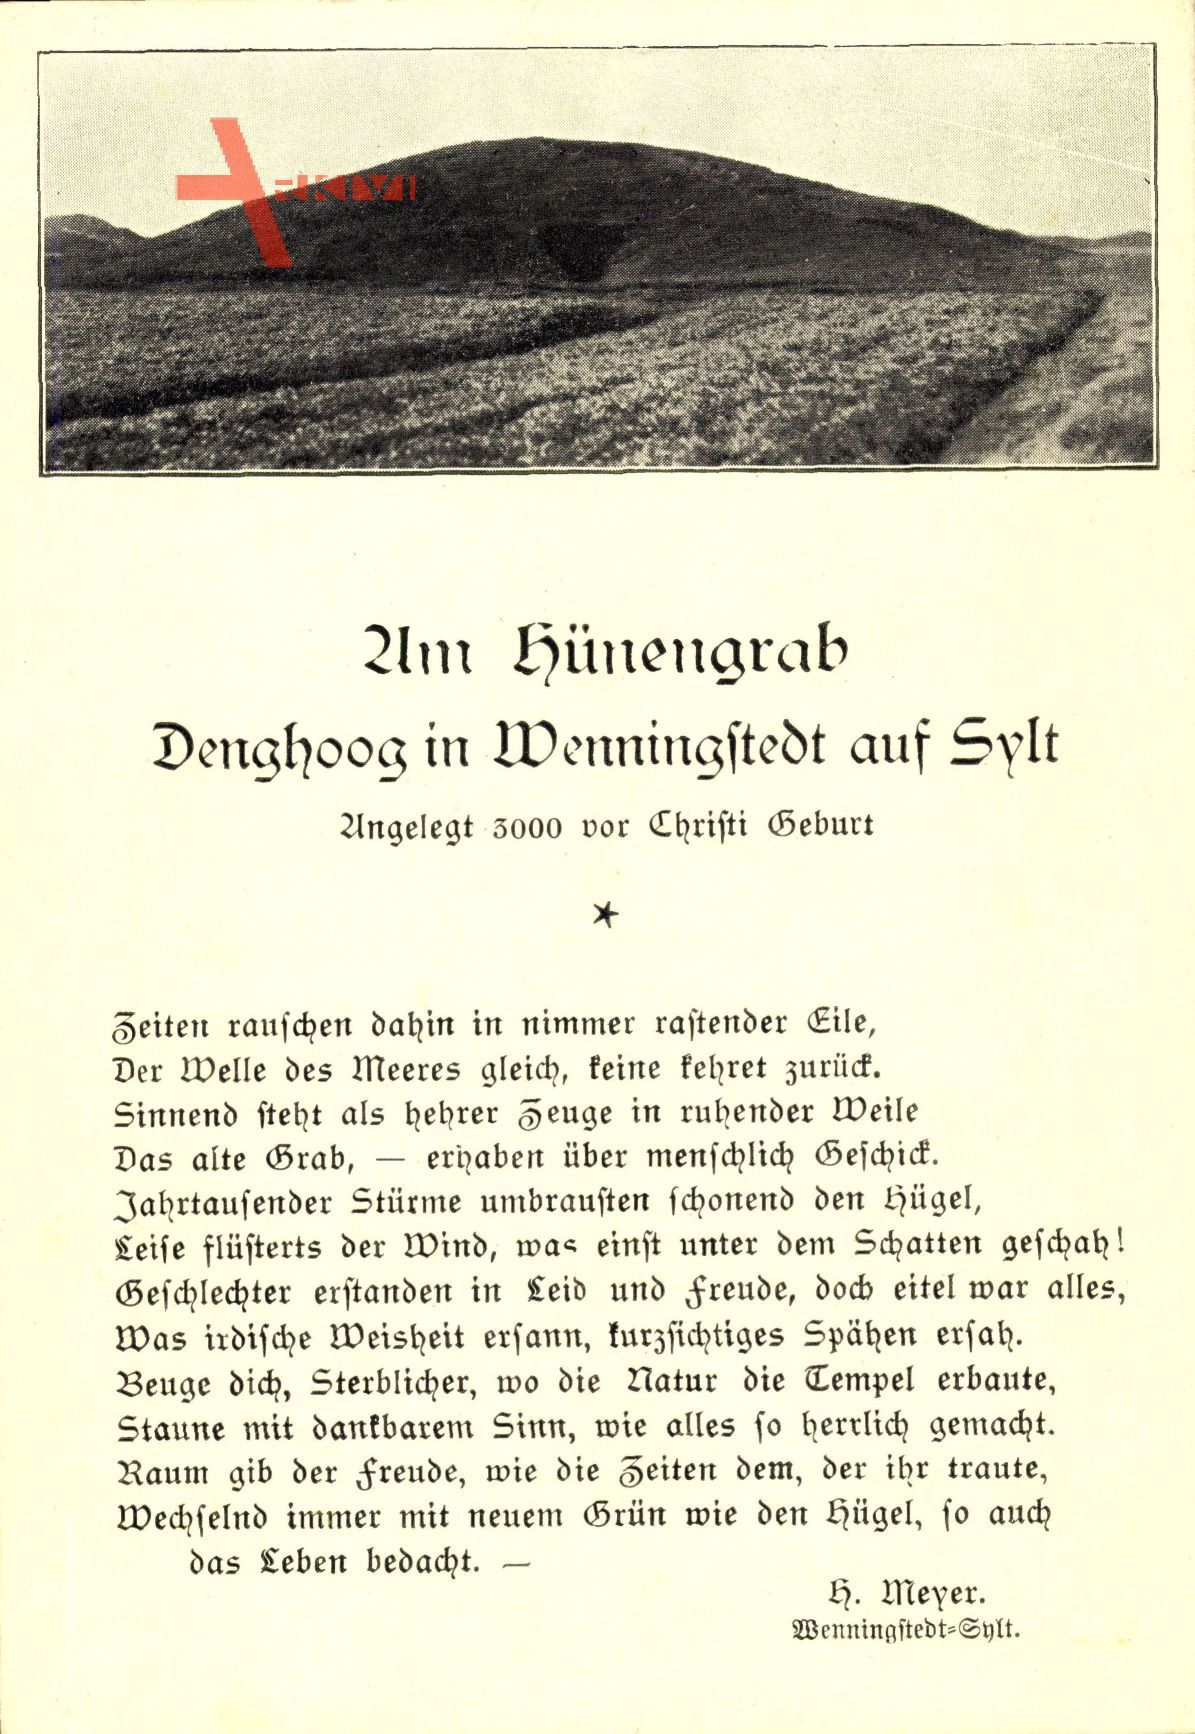 Gedicht H. Meyer, Denghoog Wenningstedt auf Sylt, Um Hünengrab